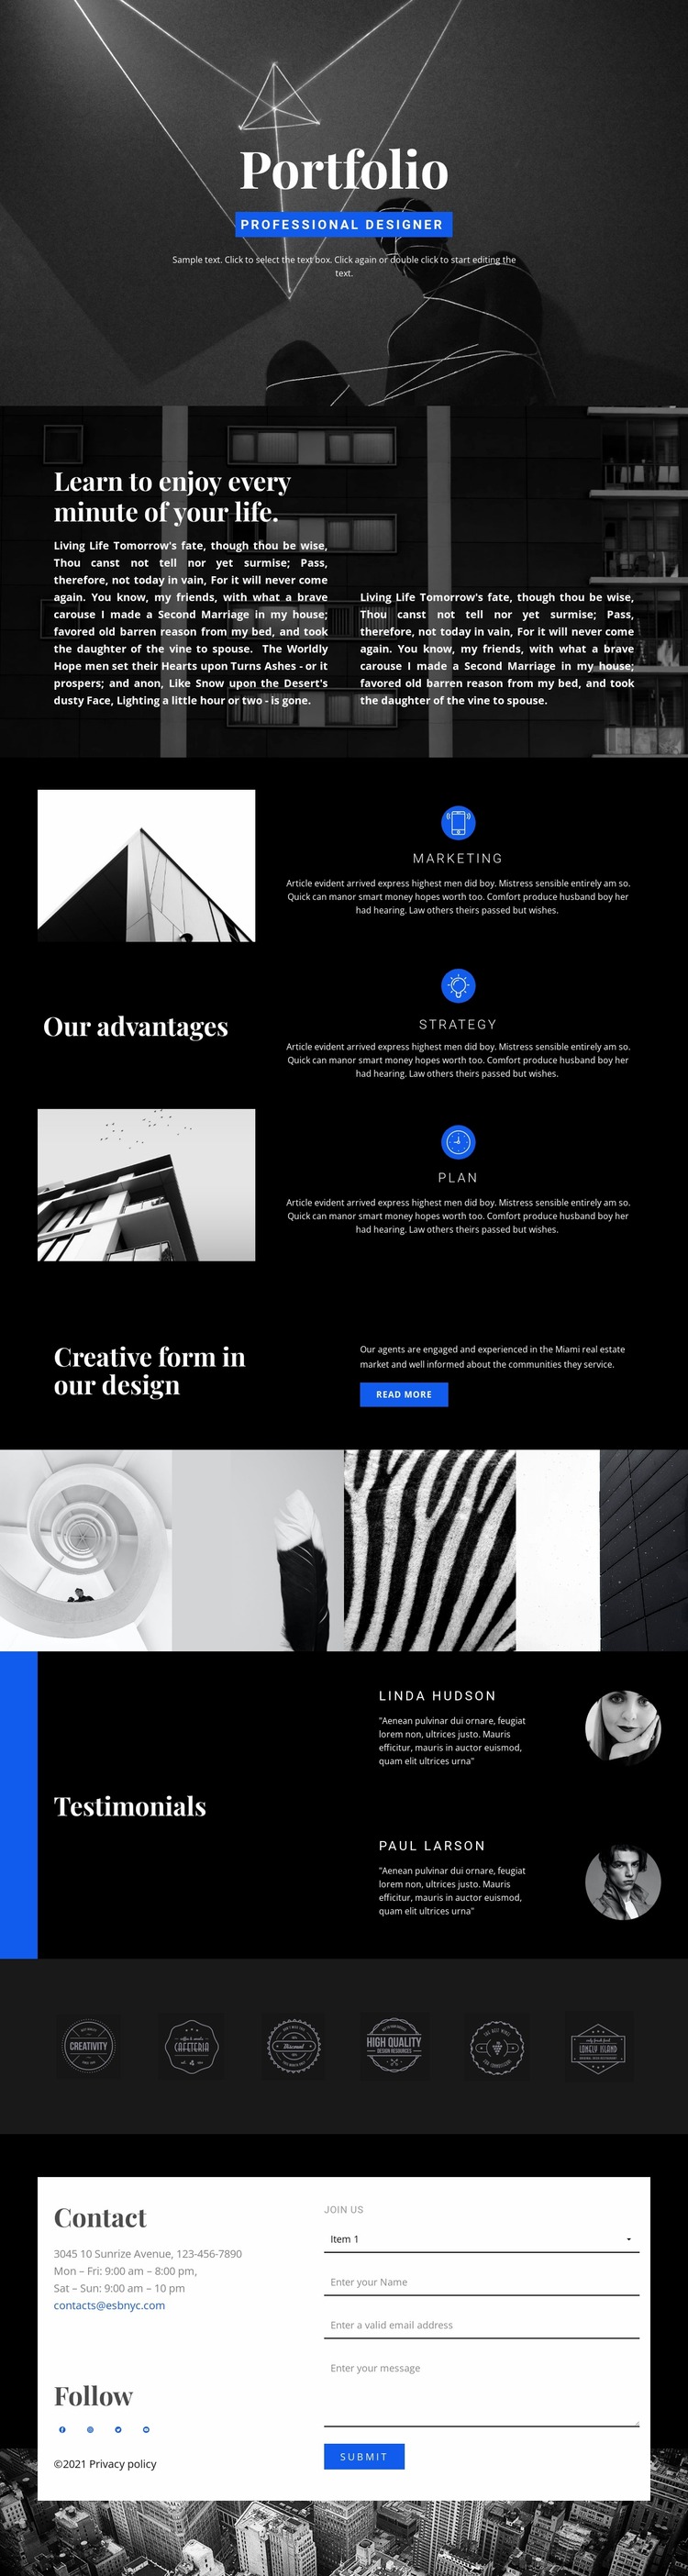 Fashion Designer Portfolio Website Mockup